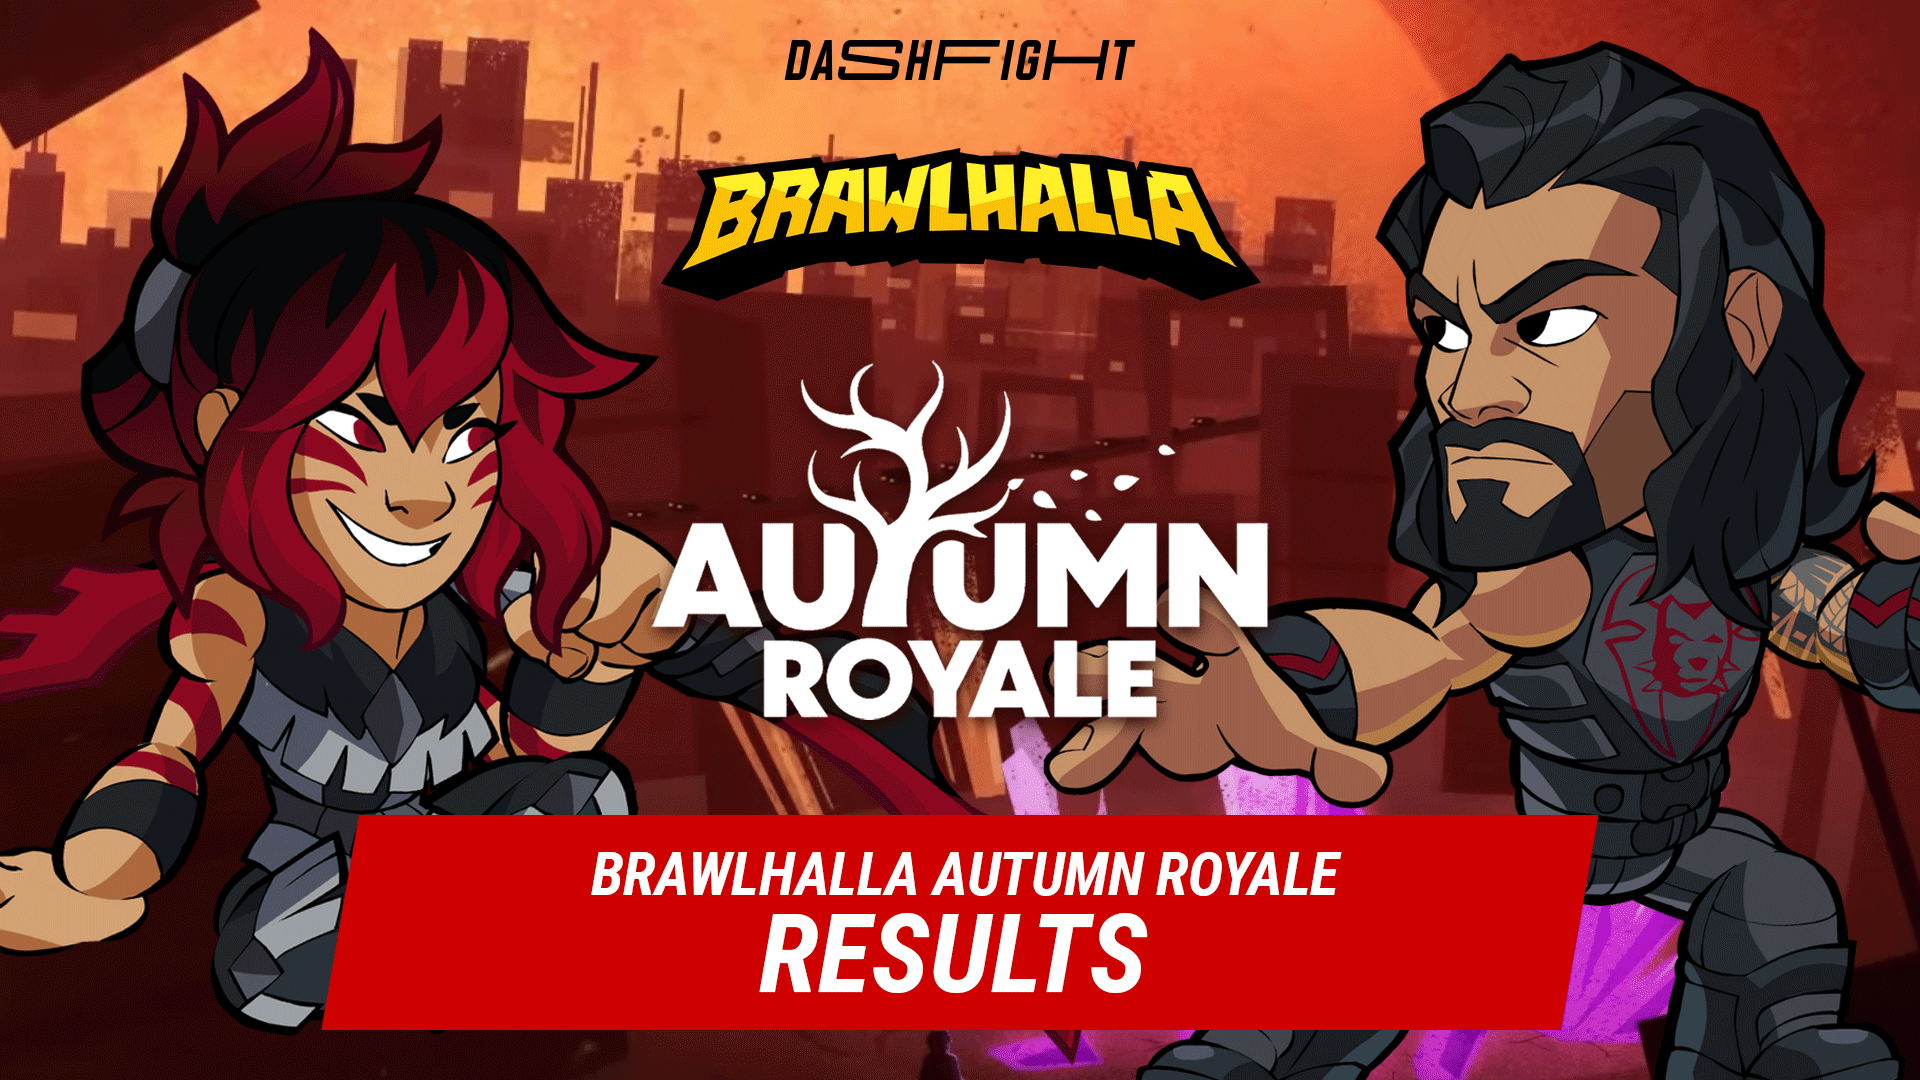 Brawlhalla Autumn Royale: Kaya is Back to Business